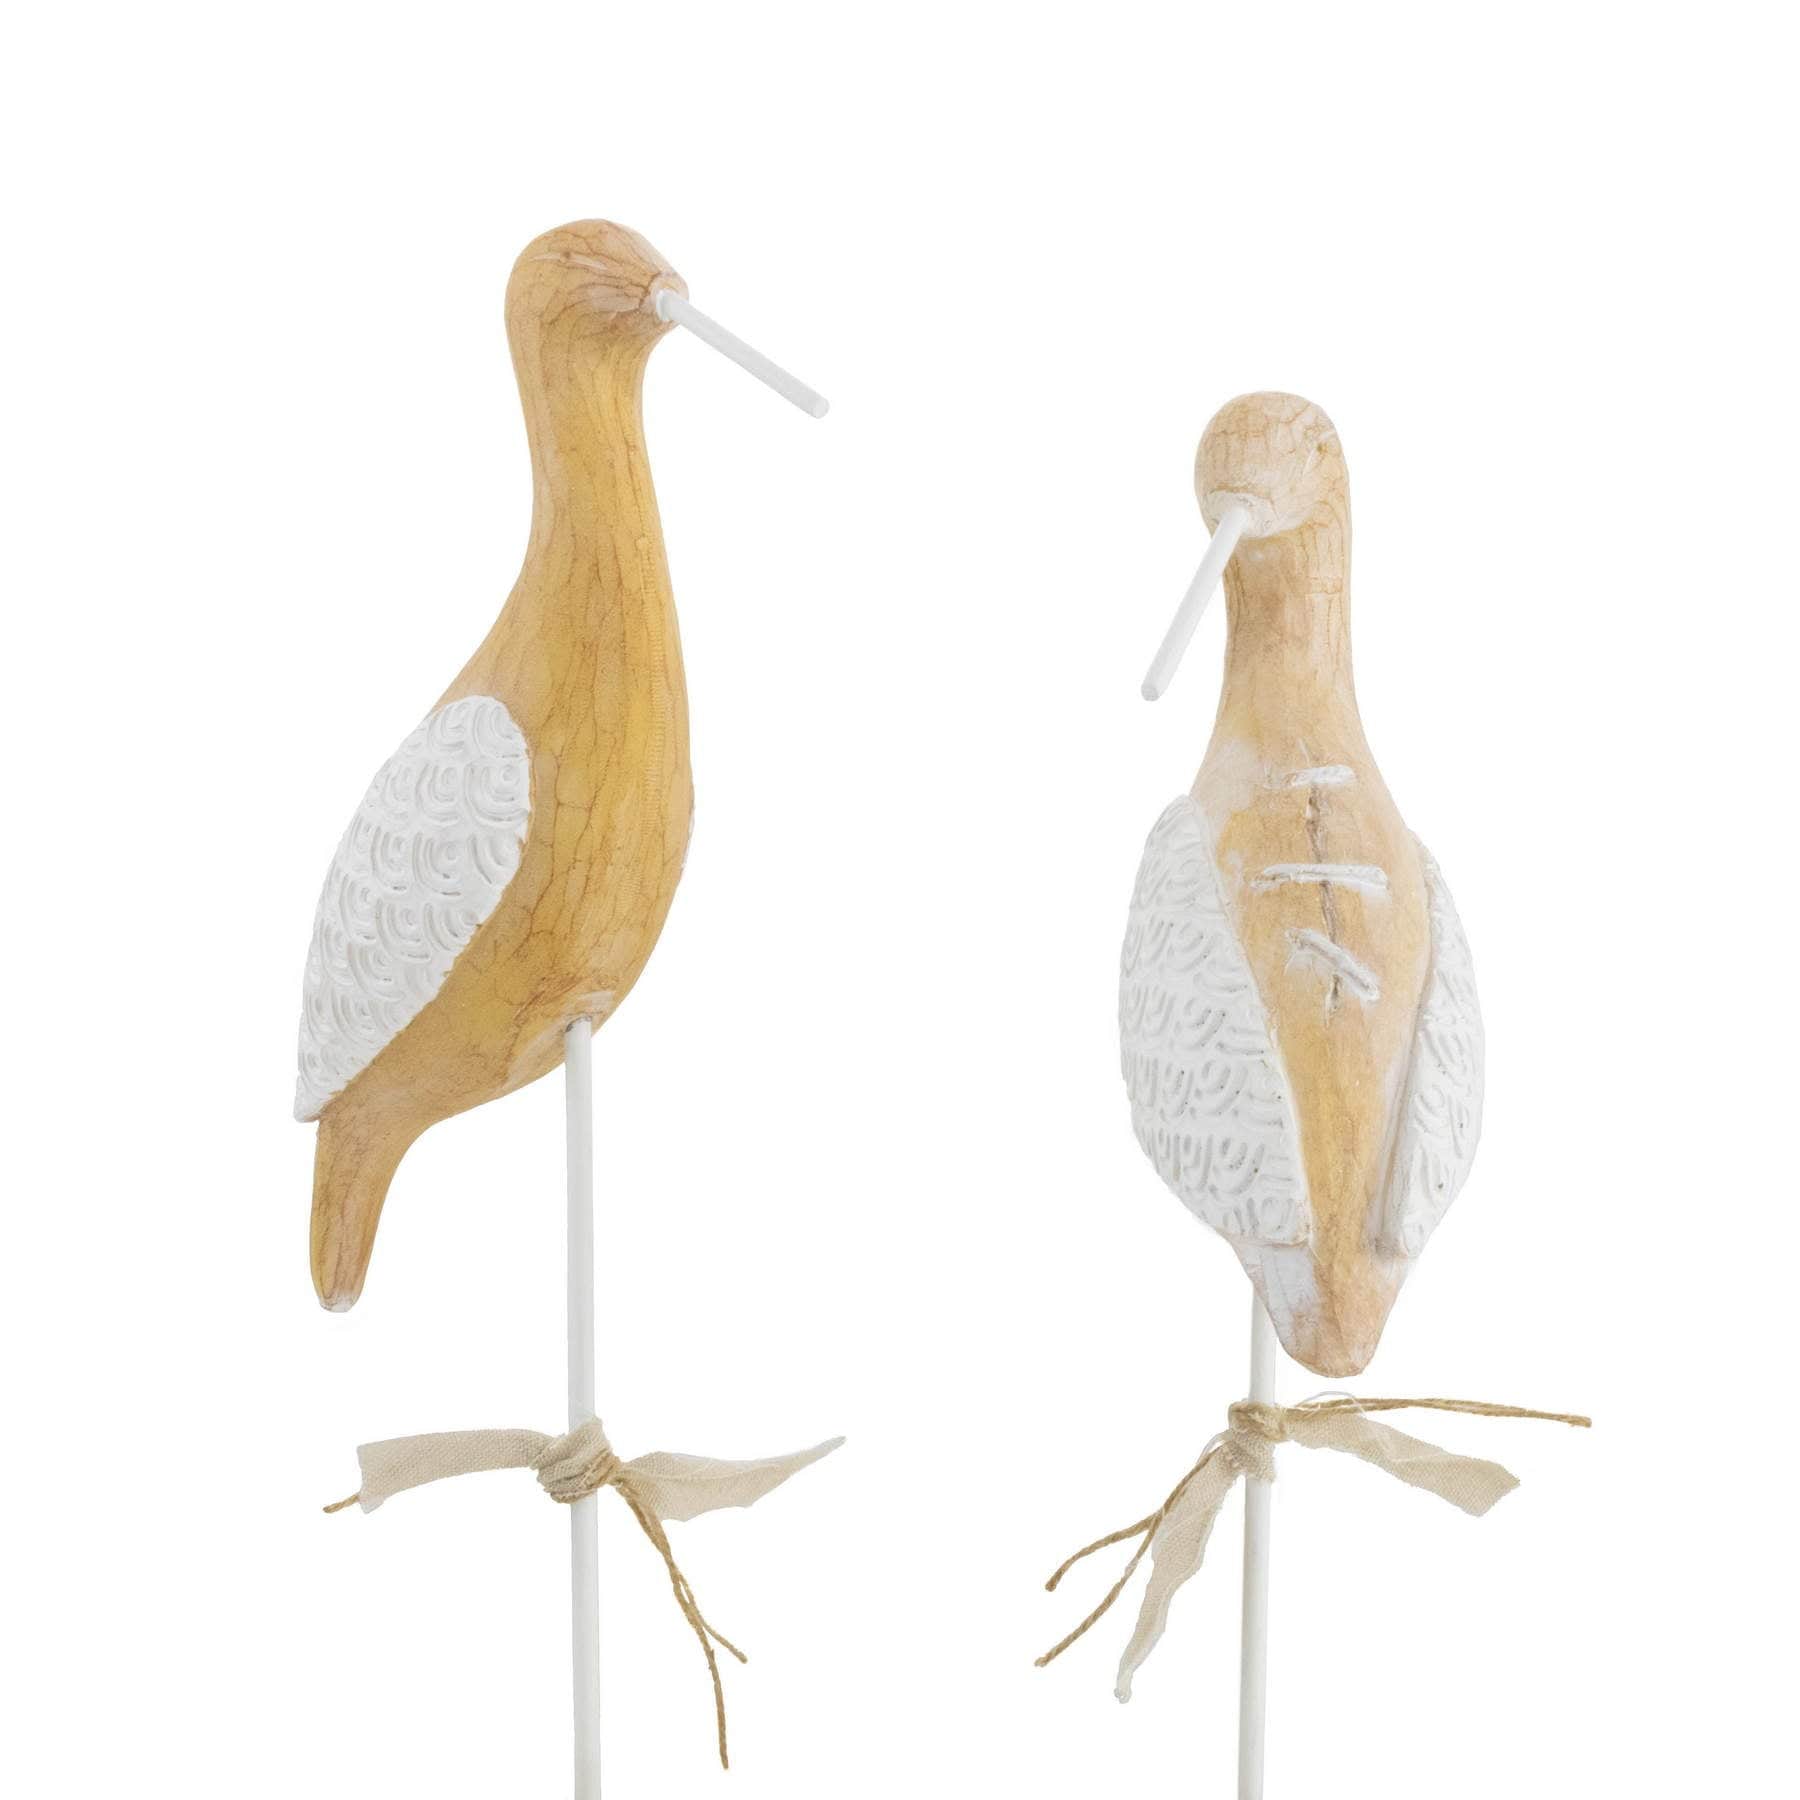 White & Beige Tall Bird Sculptures Elevate Home Decor - Sculptures & Statues